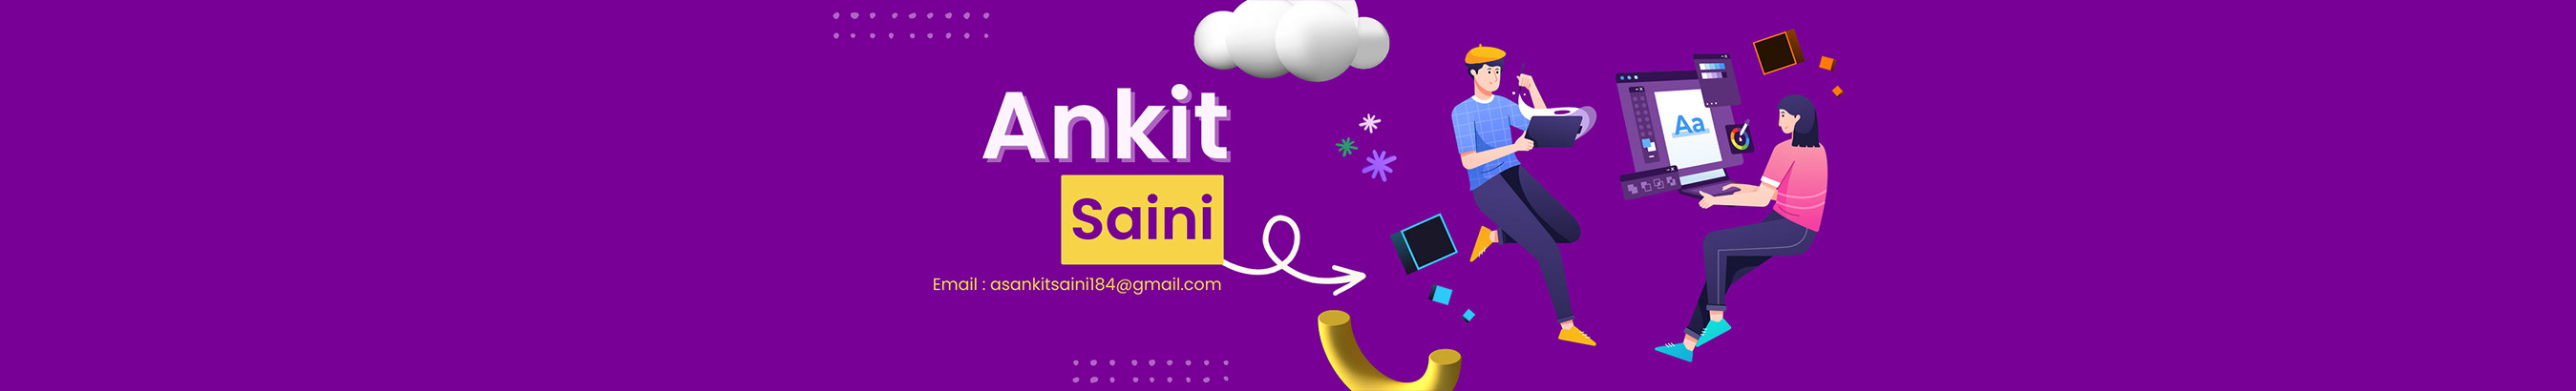 Ankit Saini's profile banner